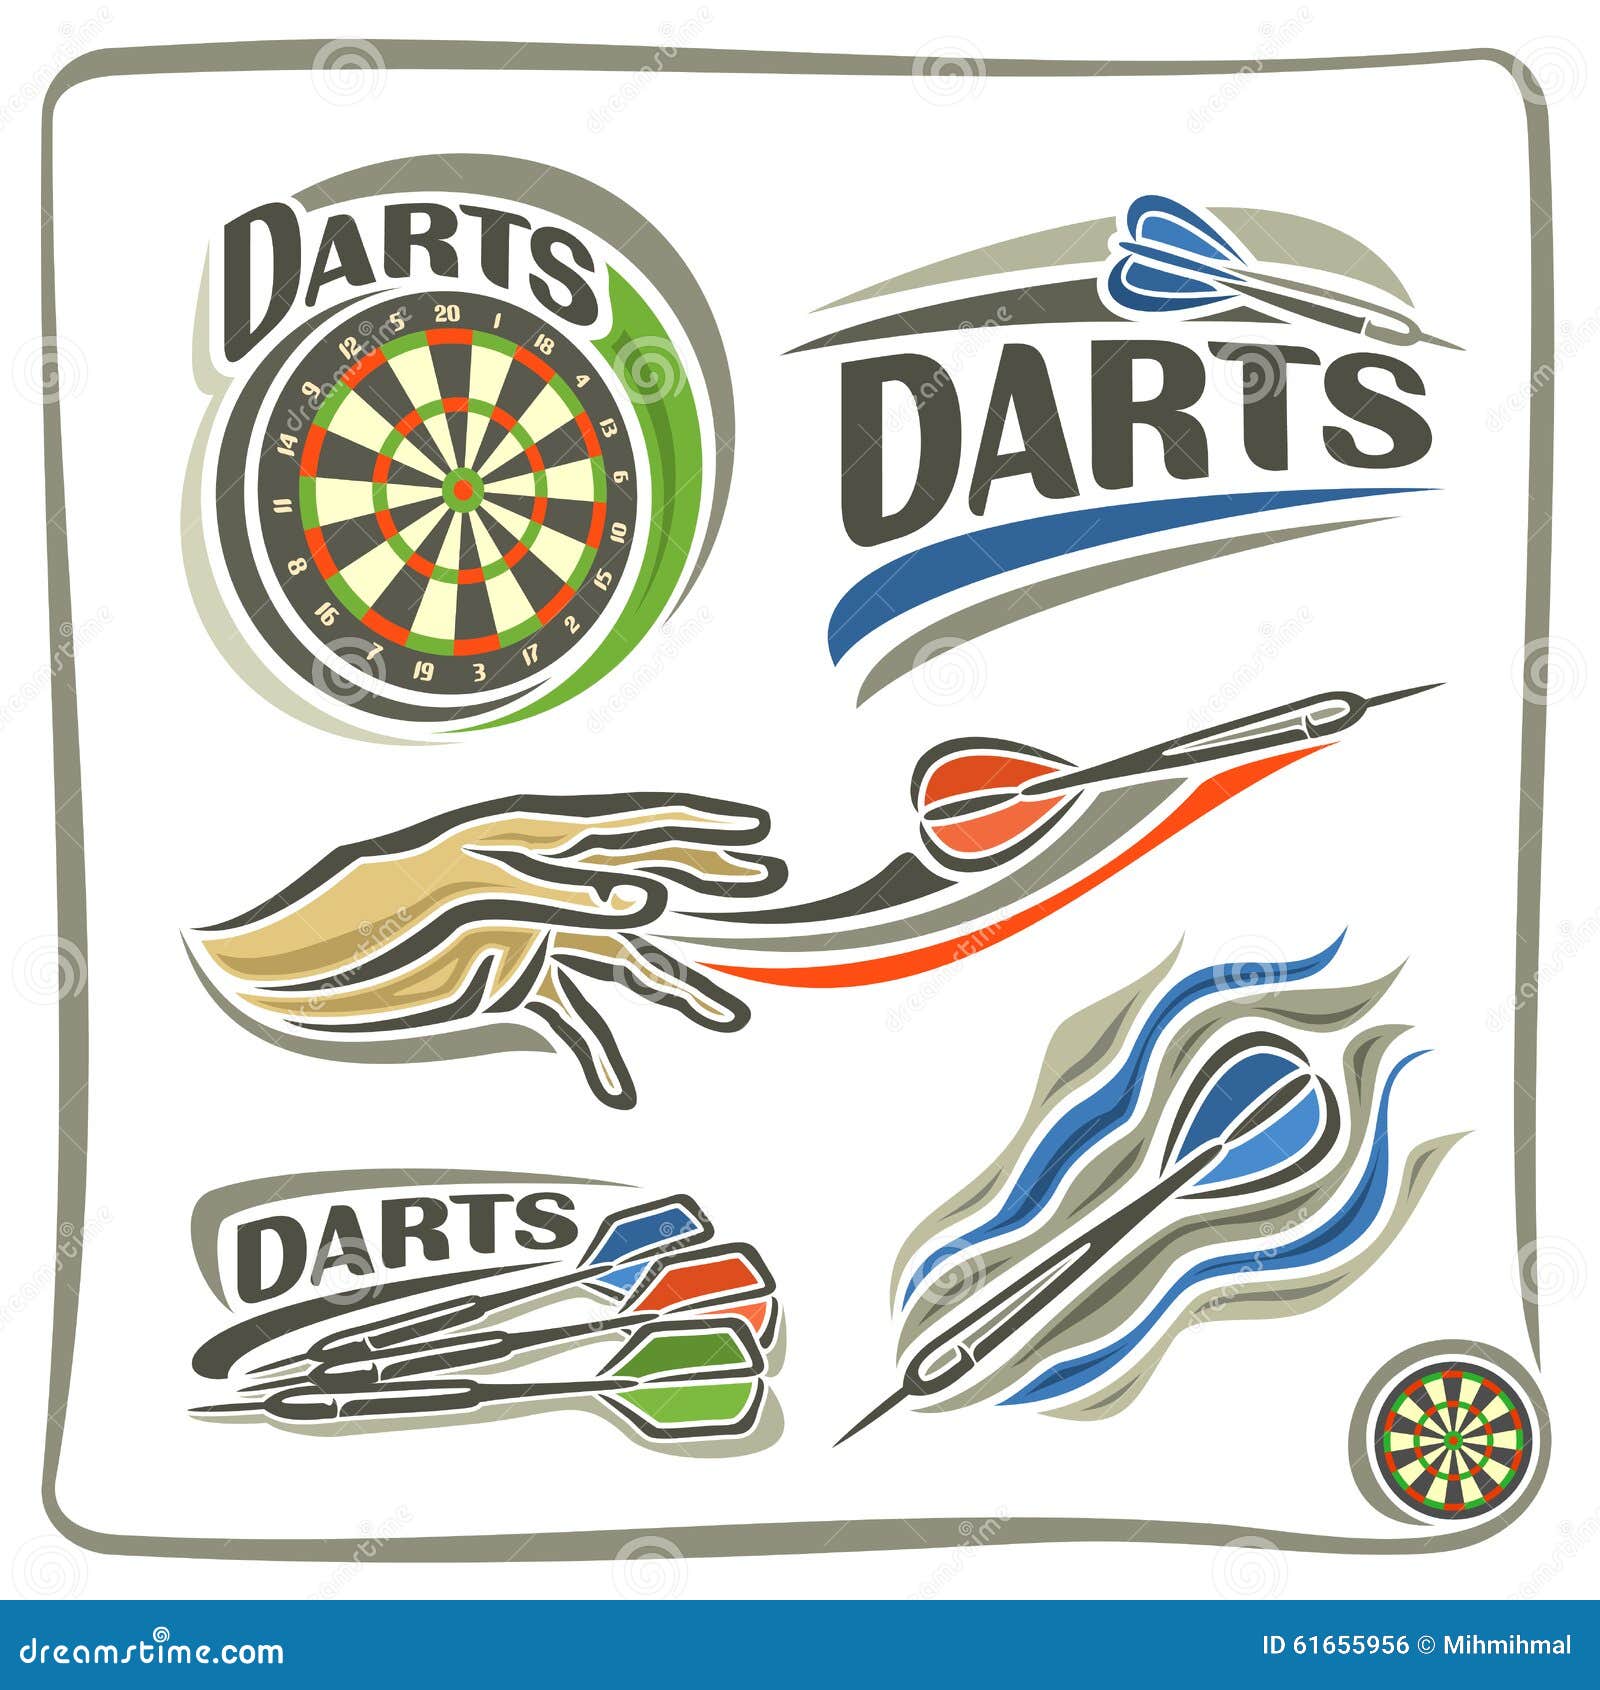 darts clipart illustrations - photo #6